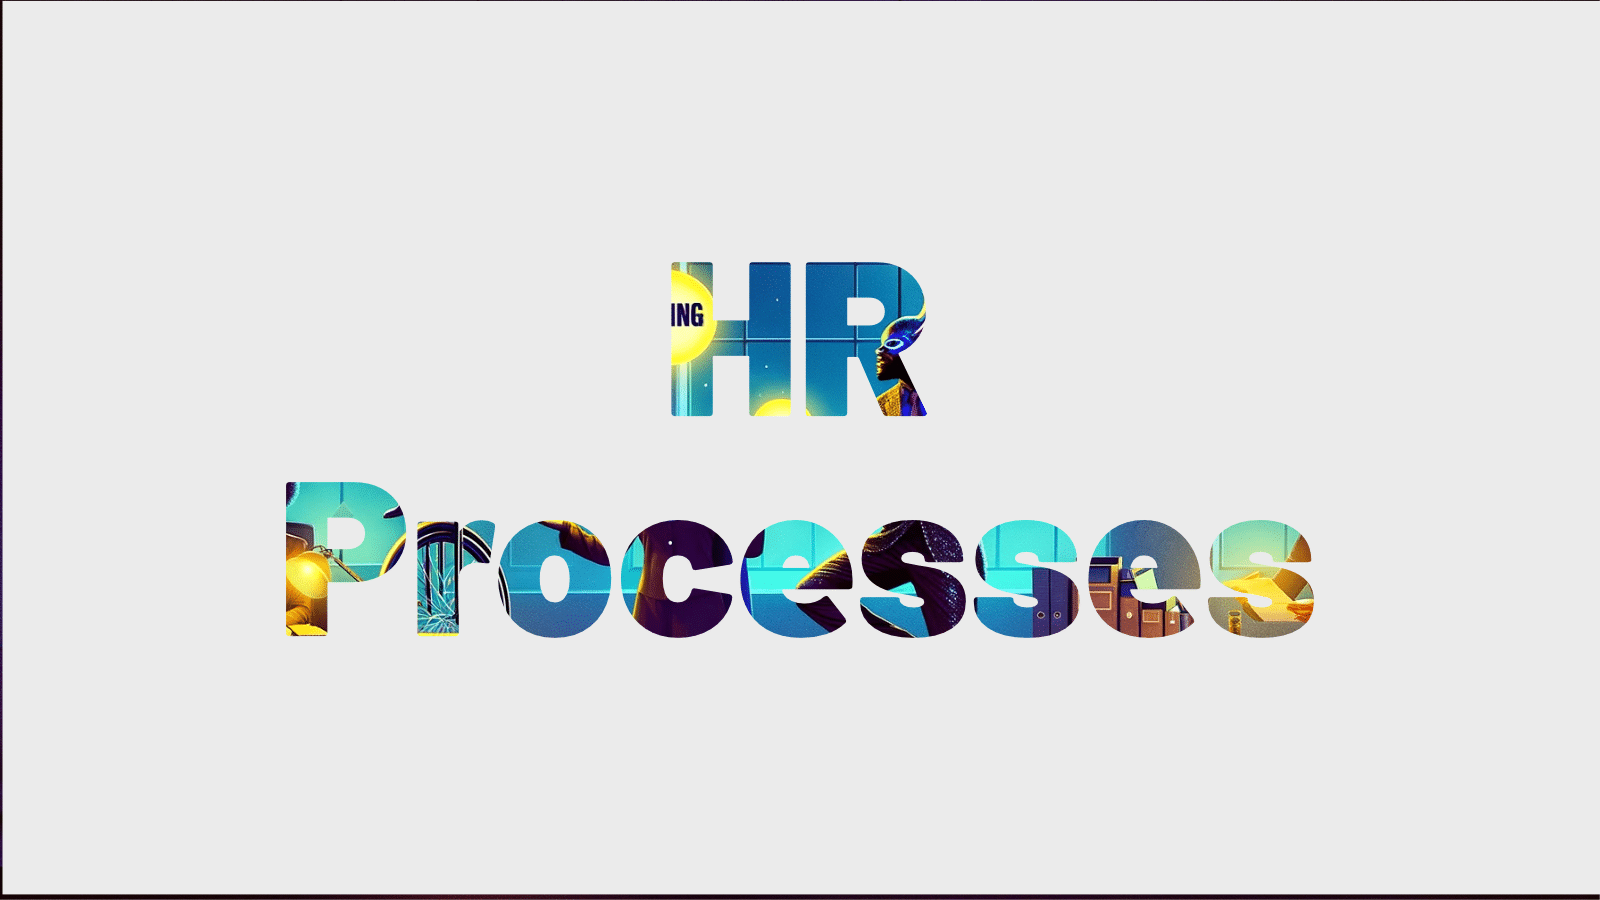 HR Processes